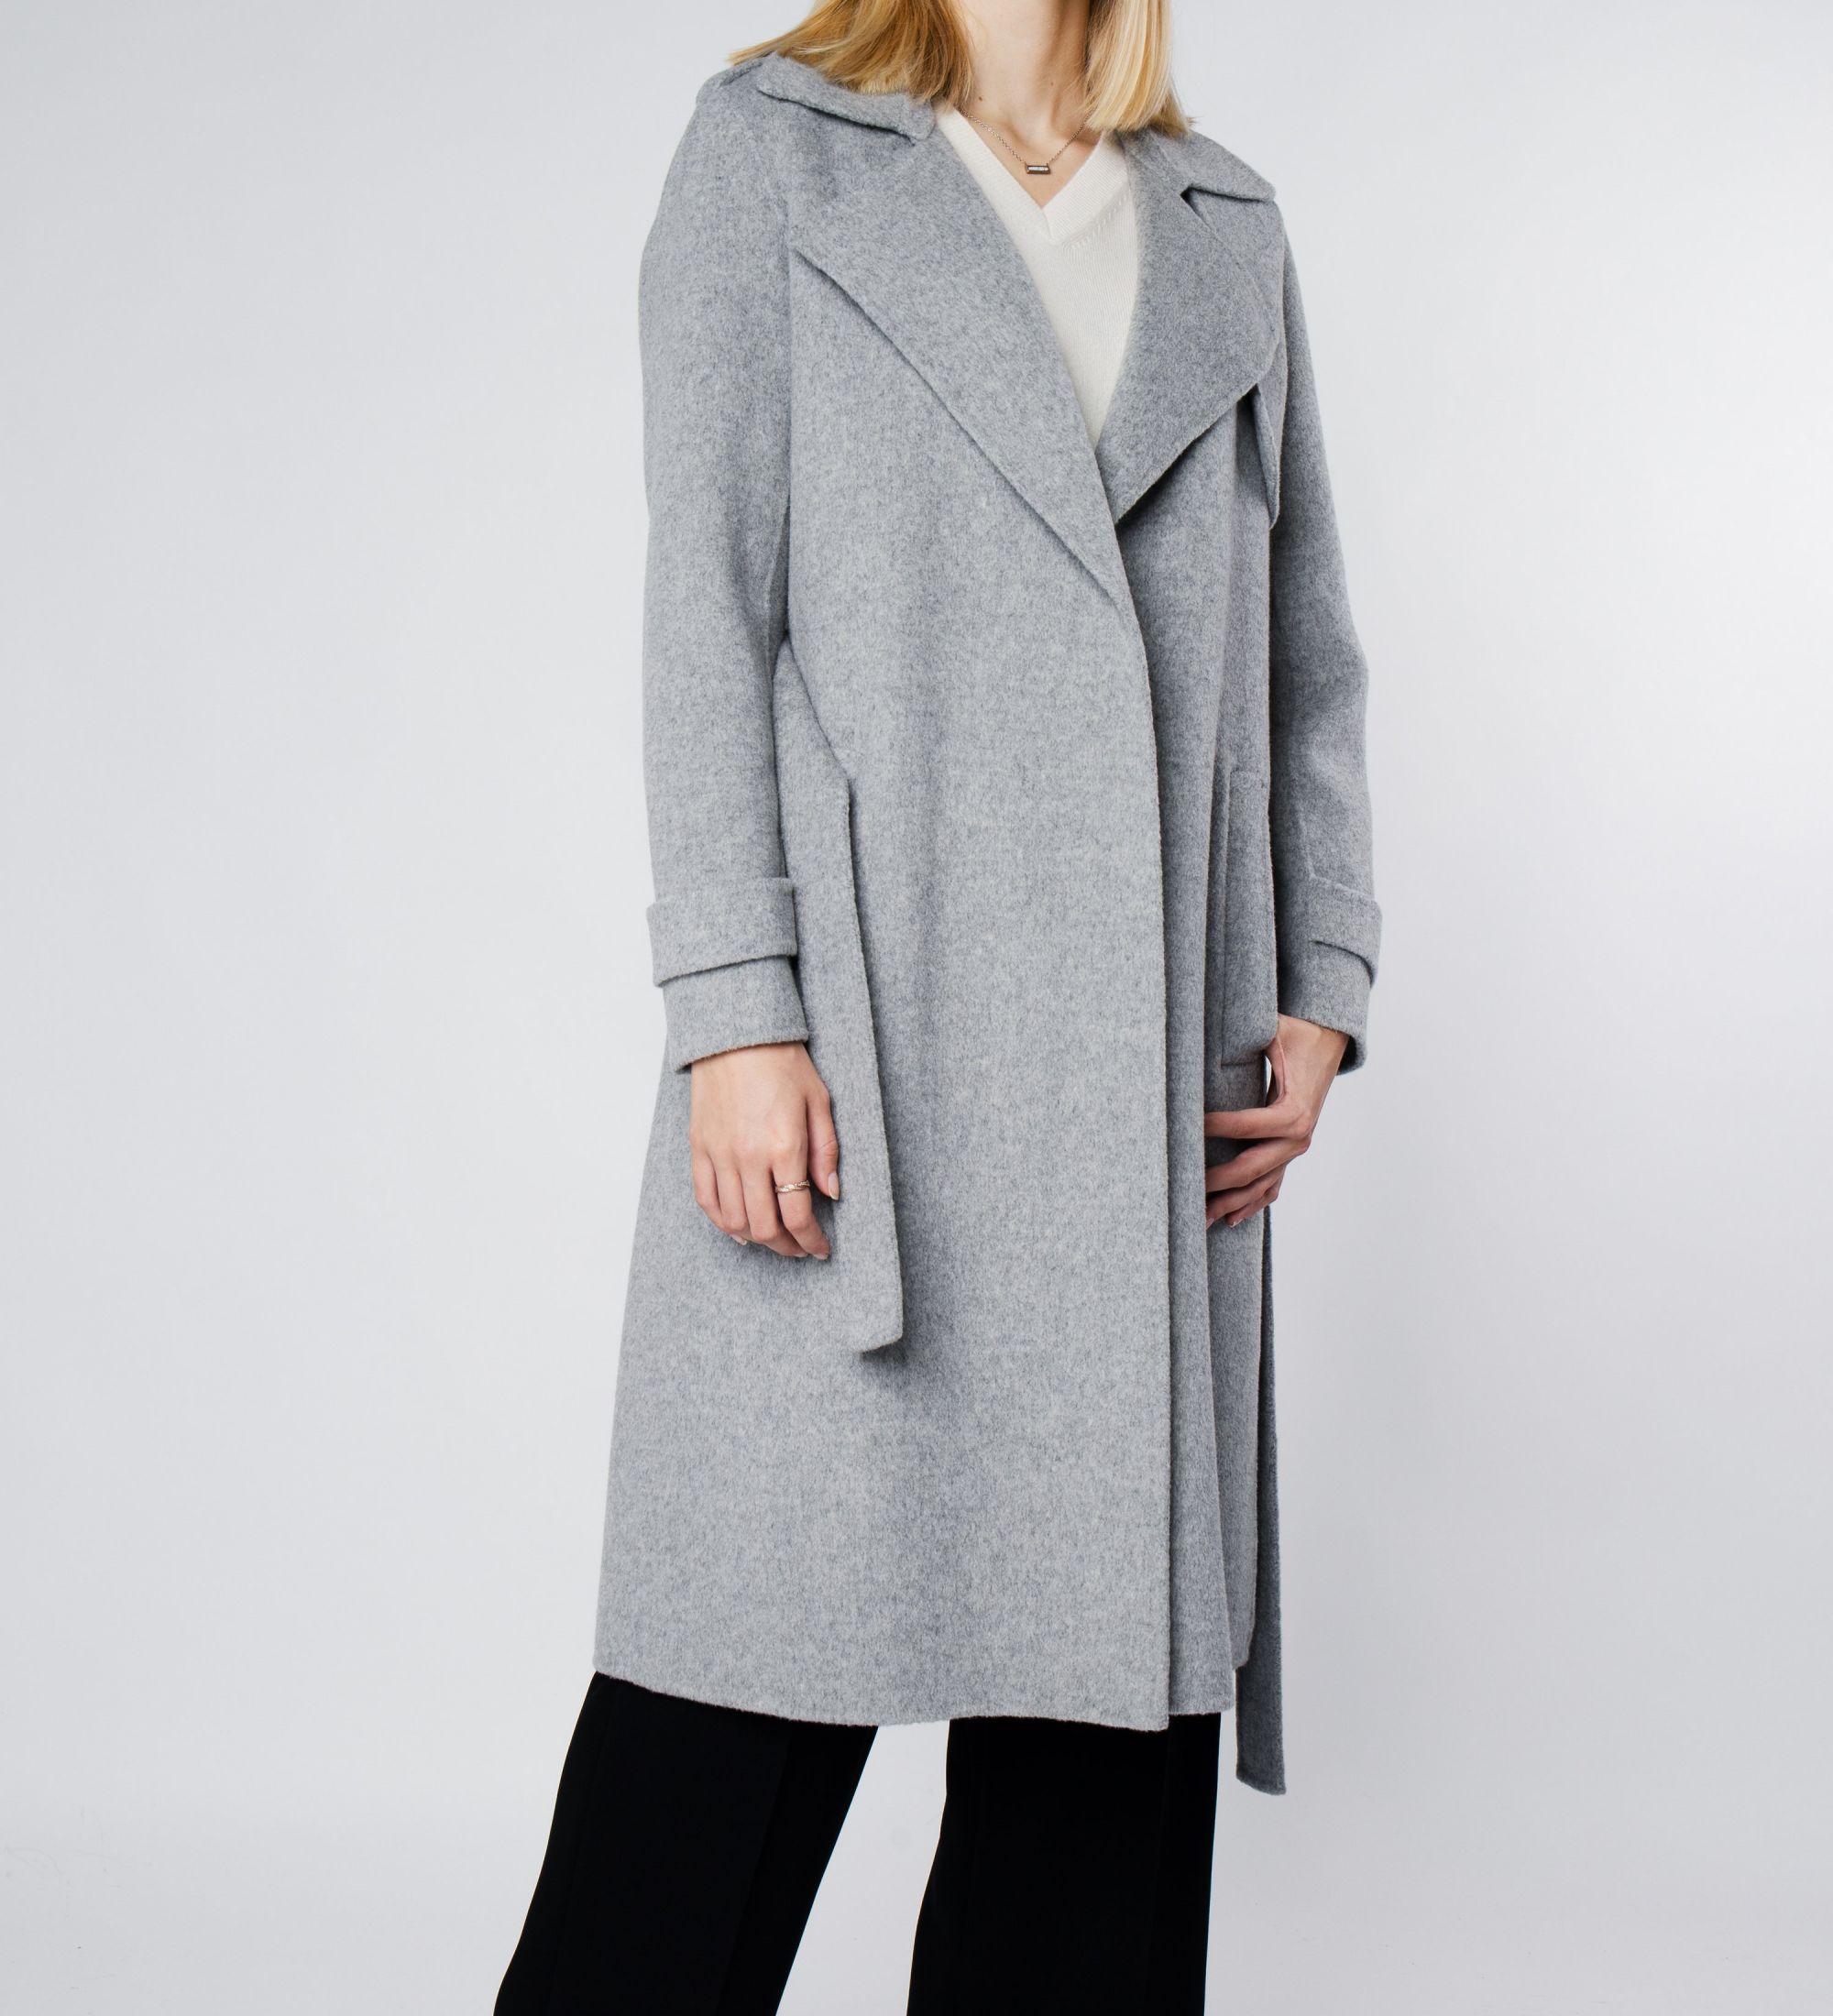 LEEZ Women Mid-length Double Face Wool Belted Overcoat Gray